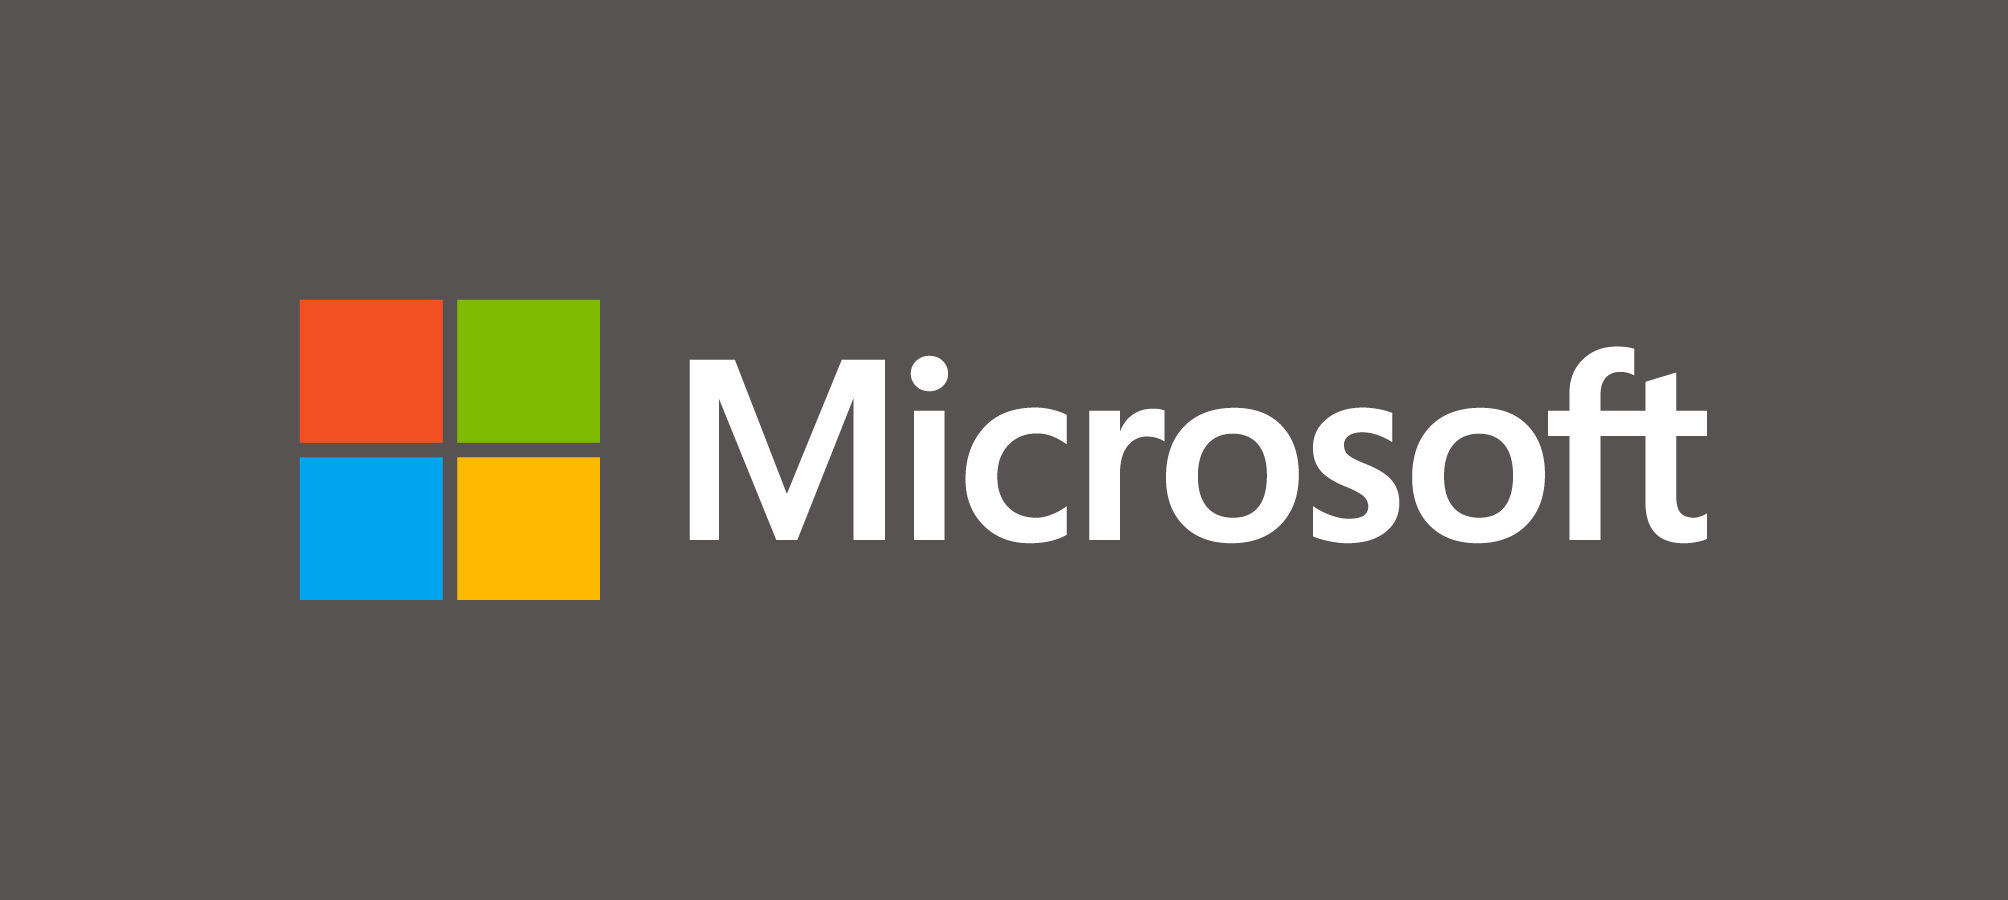 Microsoft logo rgb wht